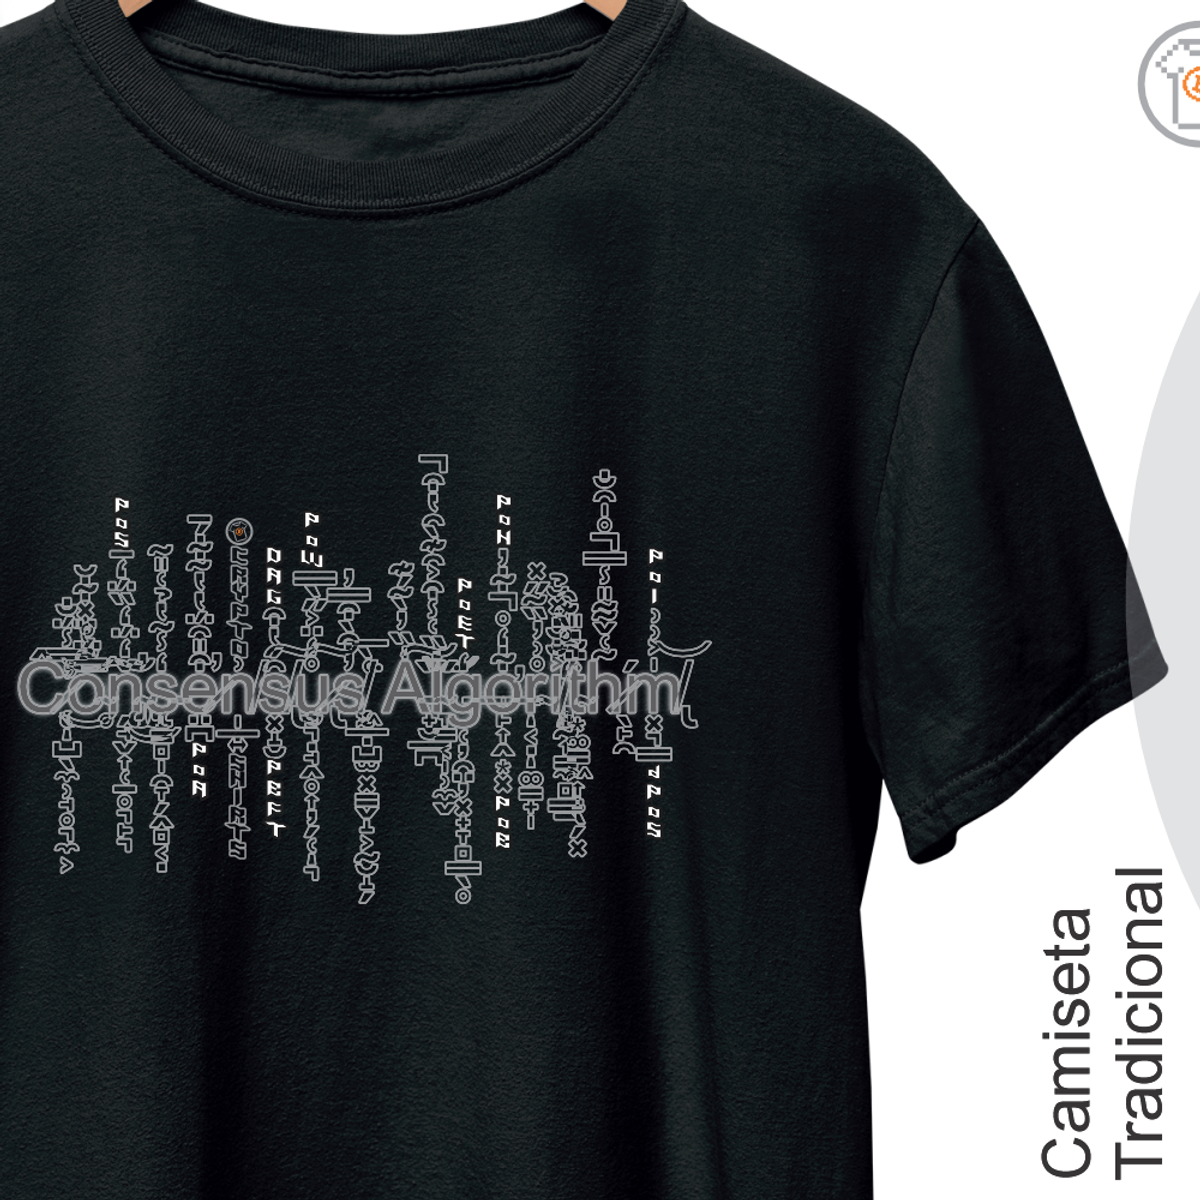 Nome do produto: Camiseta Consensus Algorithm 18